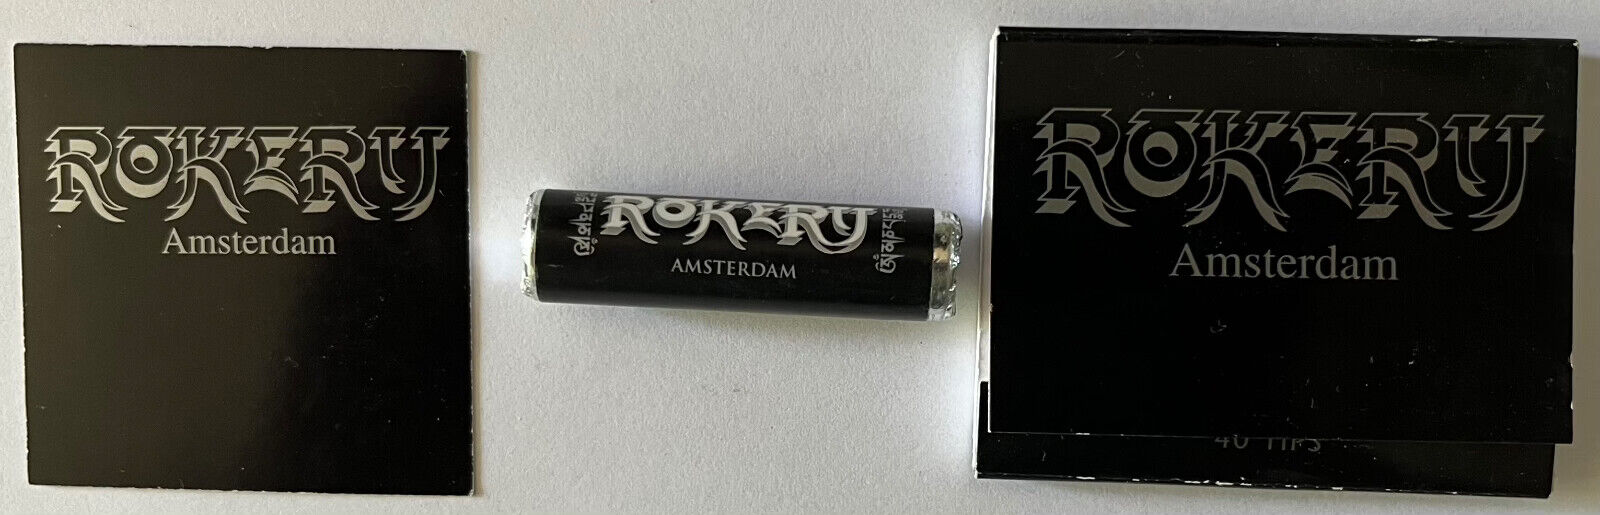 Rokerij Coffeeshop Amsterdam vintage marijuana tips mints card lot hash cannabis